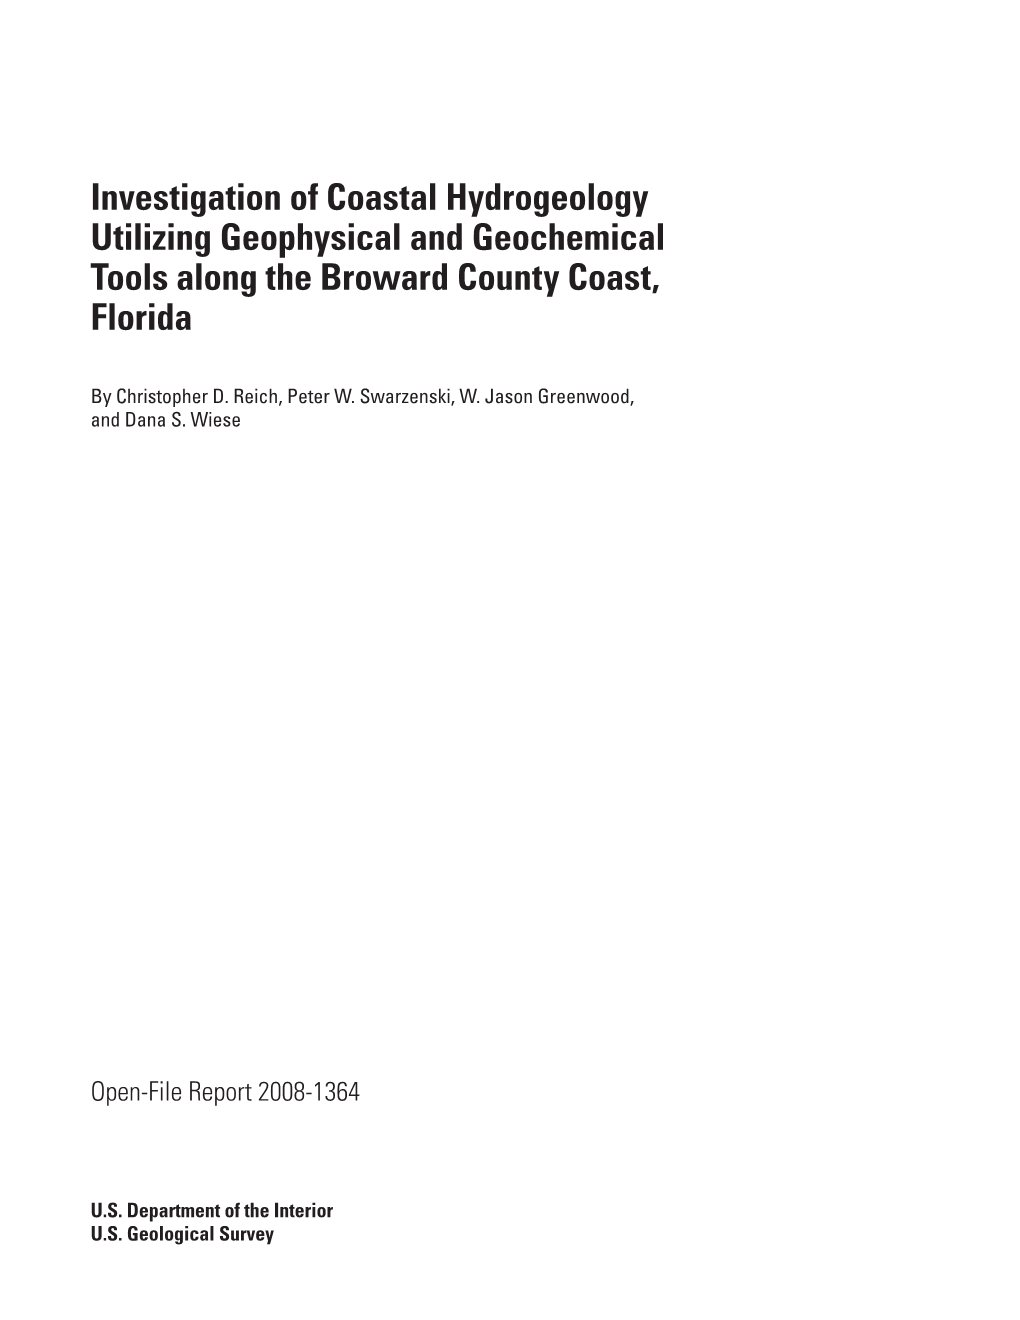 Investigation of Coastal Hydrogeology Utilizing Geophysical and Geochemical Tools Along the Broward County Coast, Florida